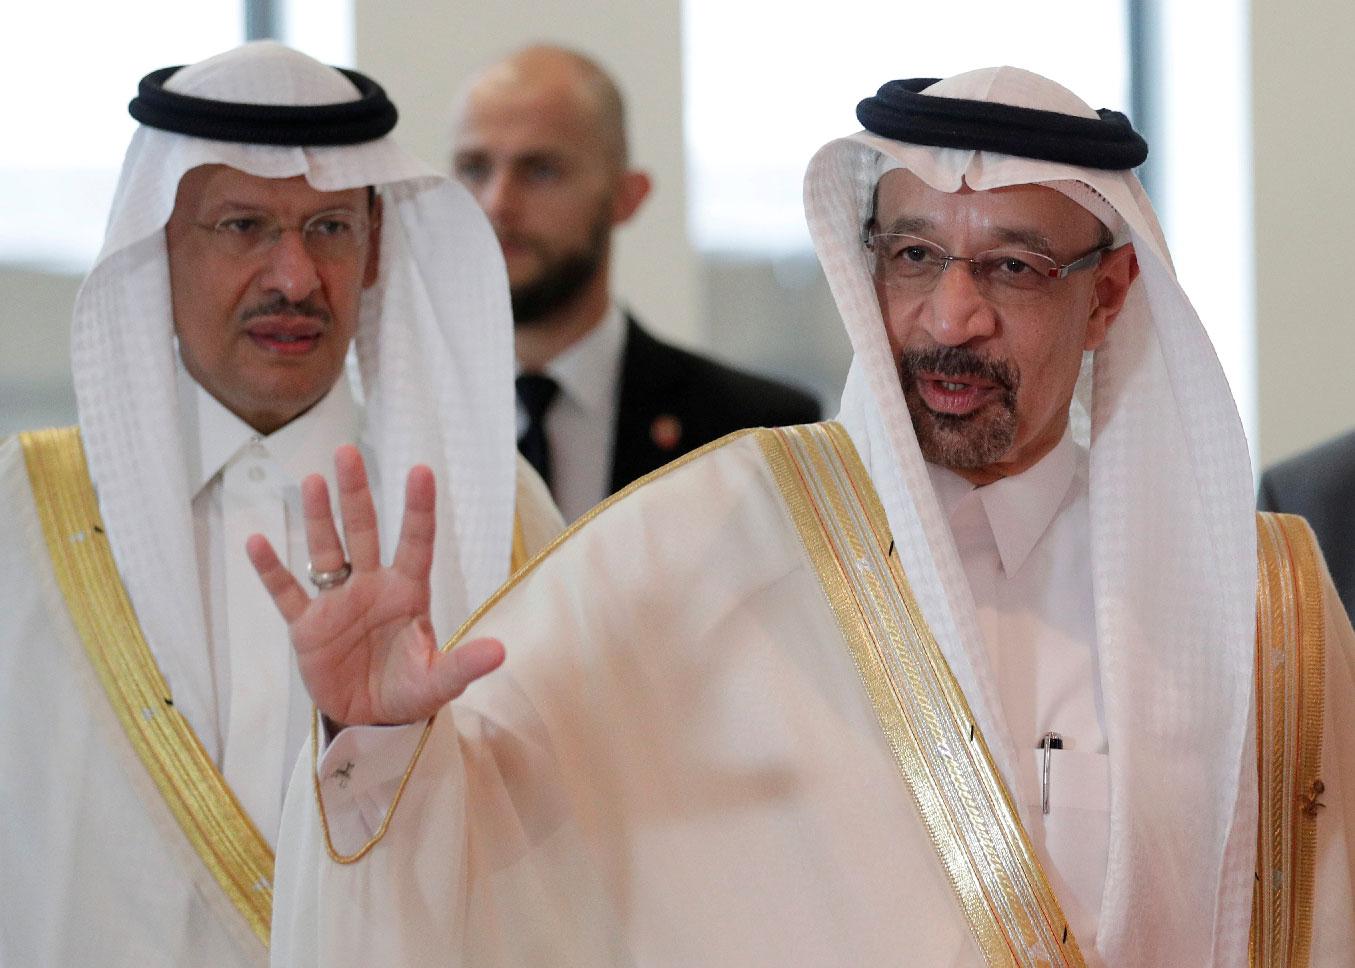 Saudi Arabia's Oil Minister Khalid al-Falih arrives for an OPEC meeting in Vienna, Austria, June 22, 2018.